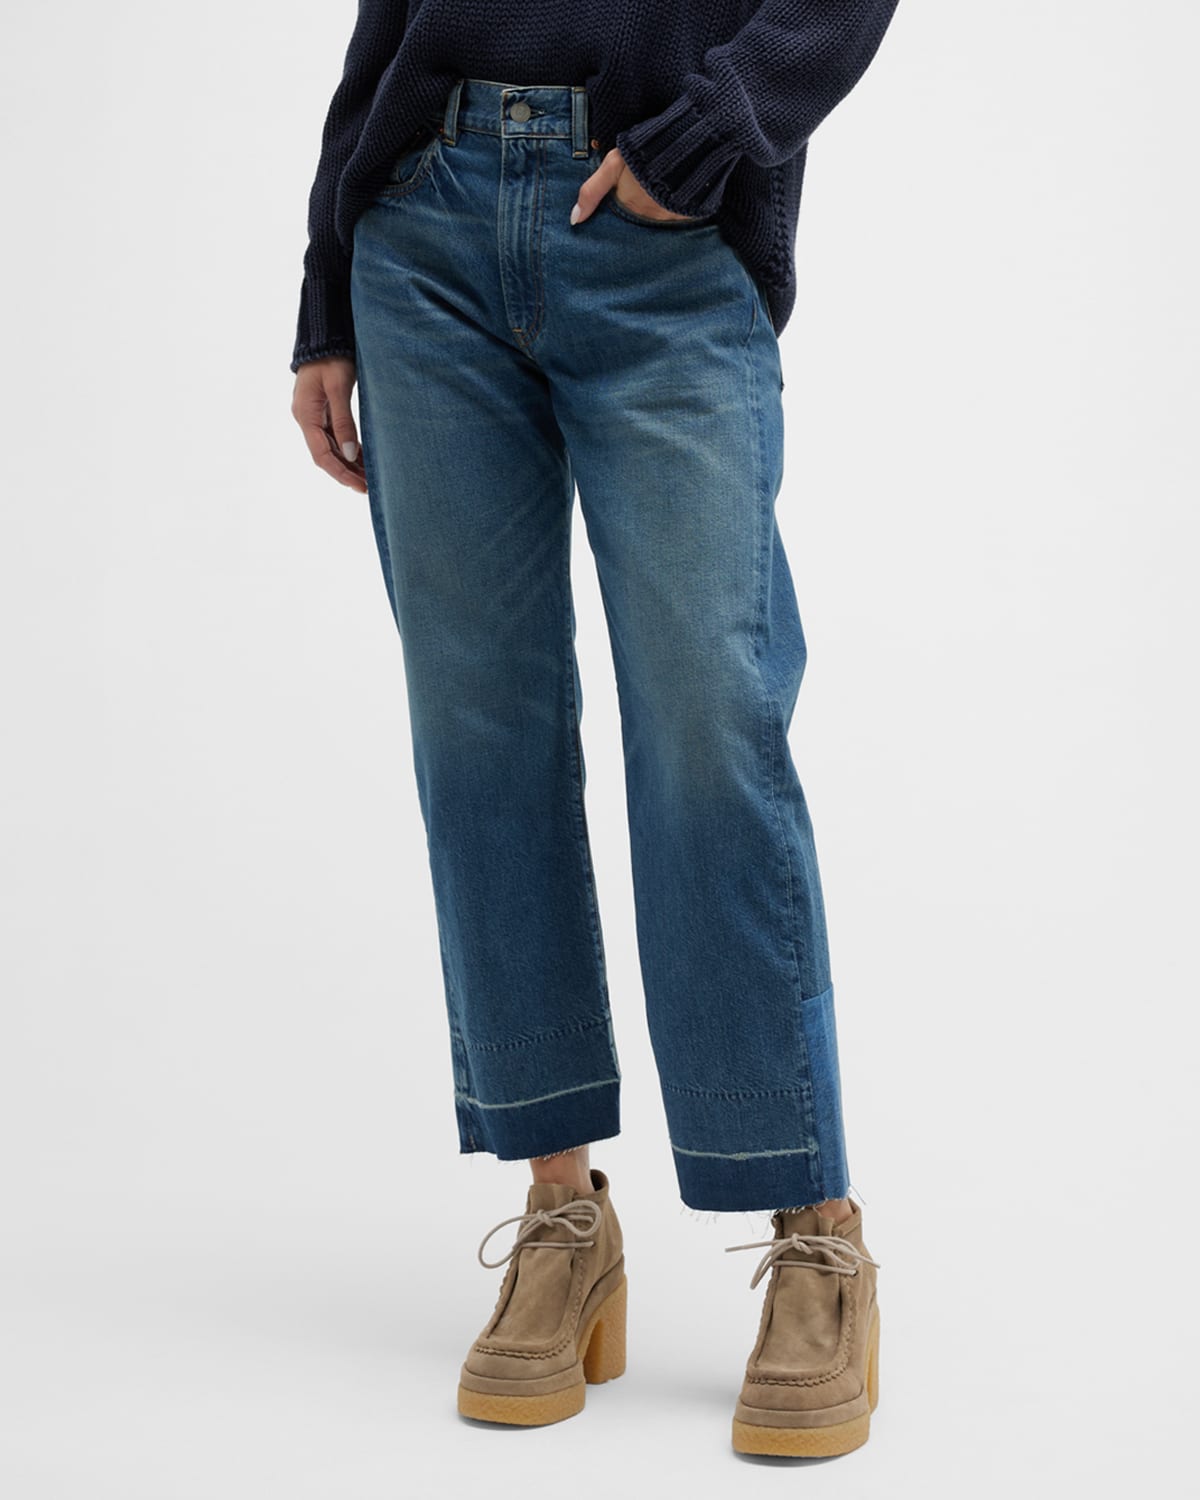 Denimist Lucy Low-Rise Boyfriend Jeans